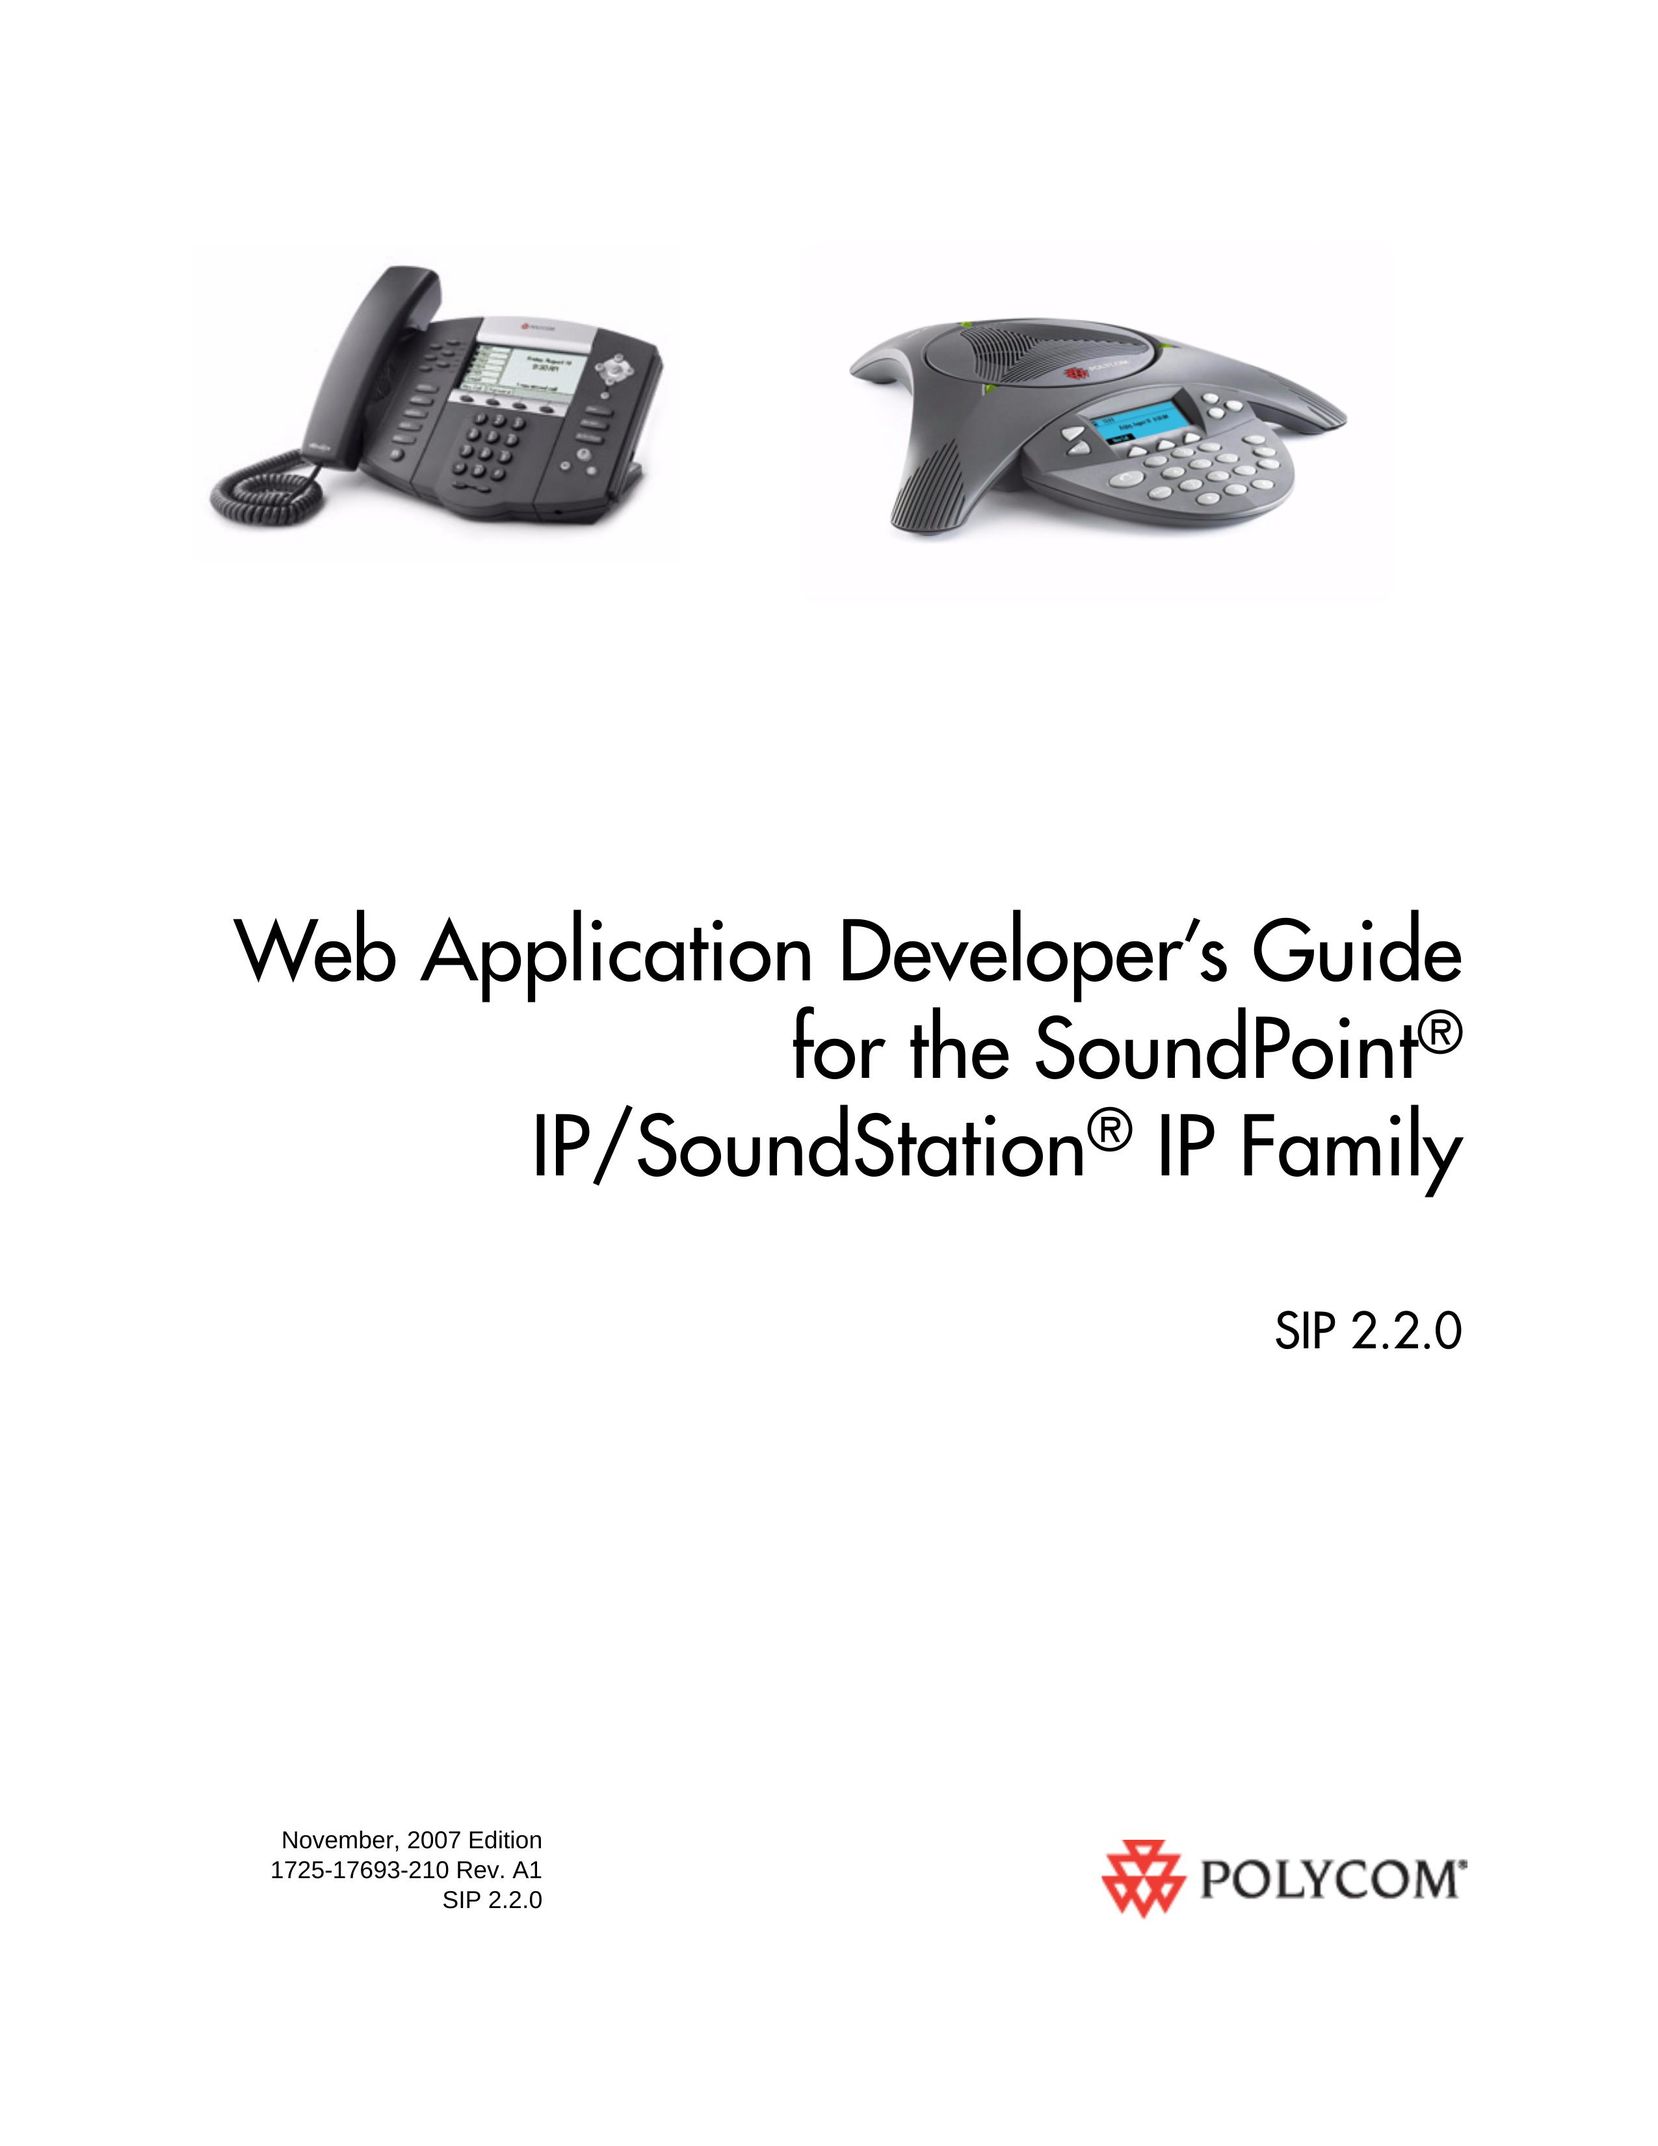 Polycom SIP 2.2.0 Video Game Sound System User Manual